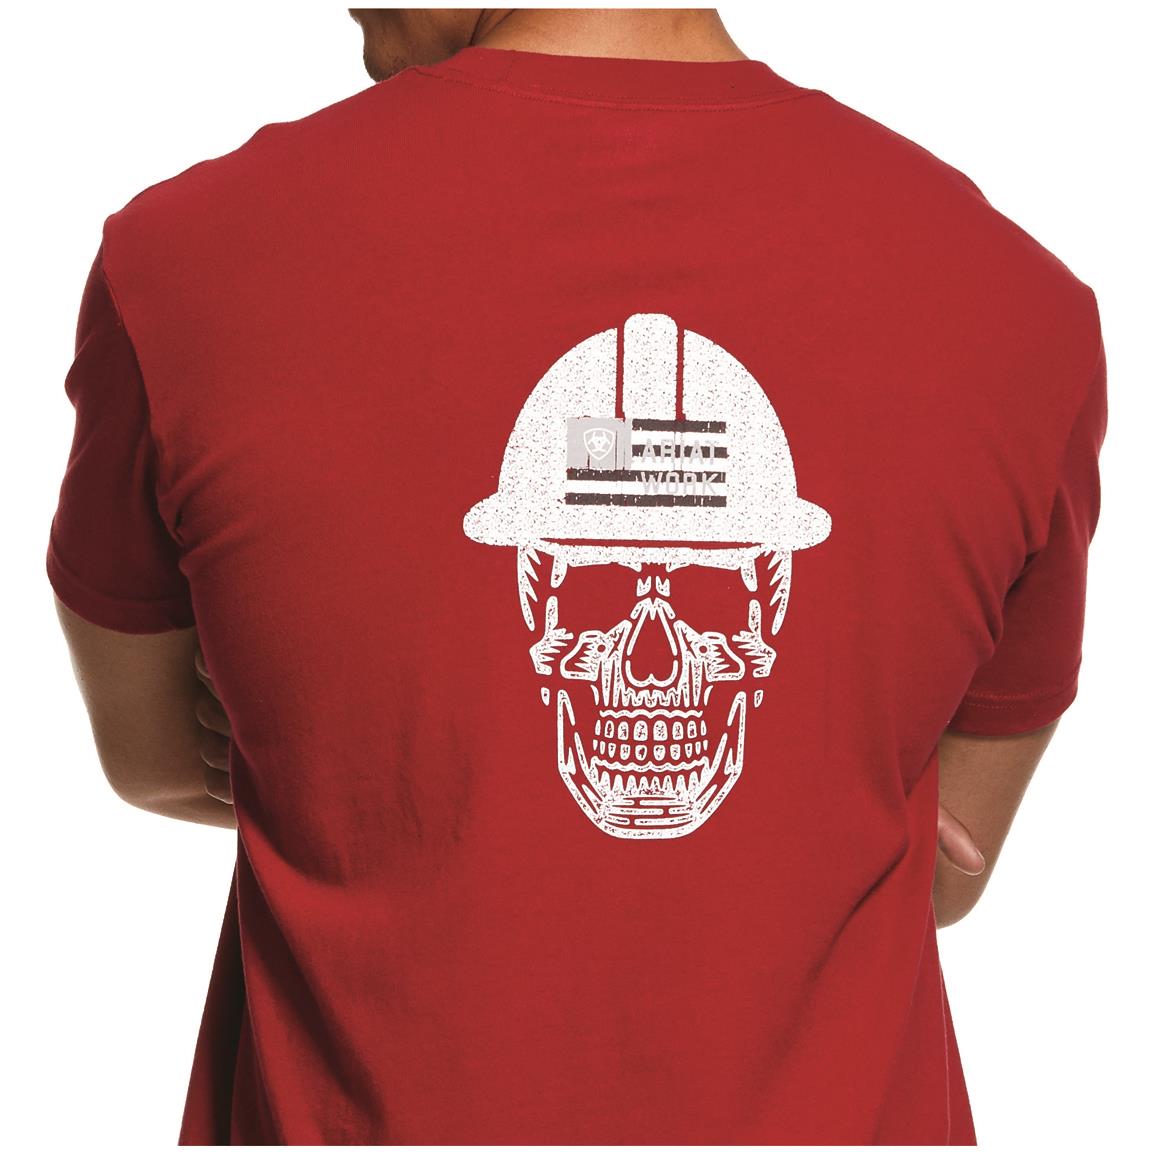 Ariat Men's Rebar CottonStrong Roughneck Graphic Shirt, Rio Red